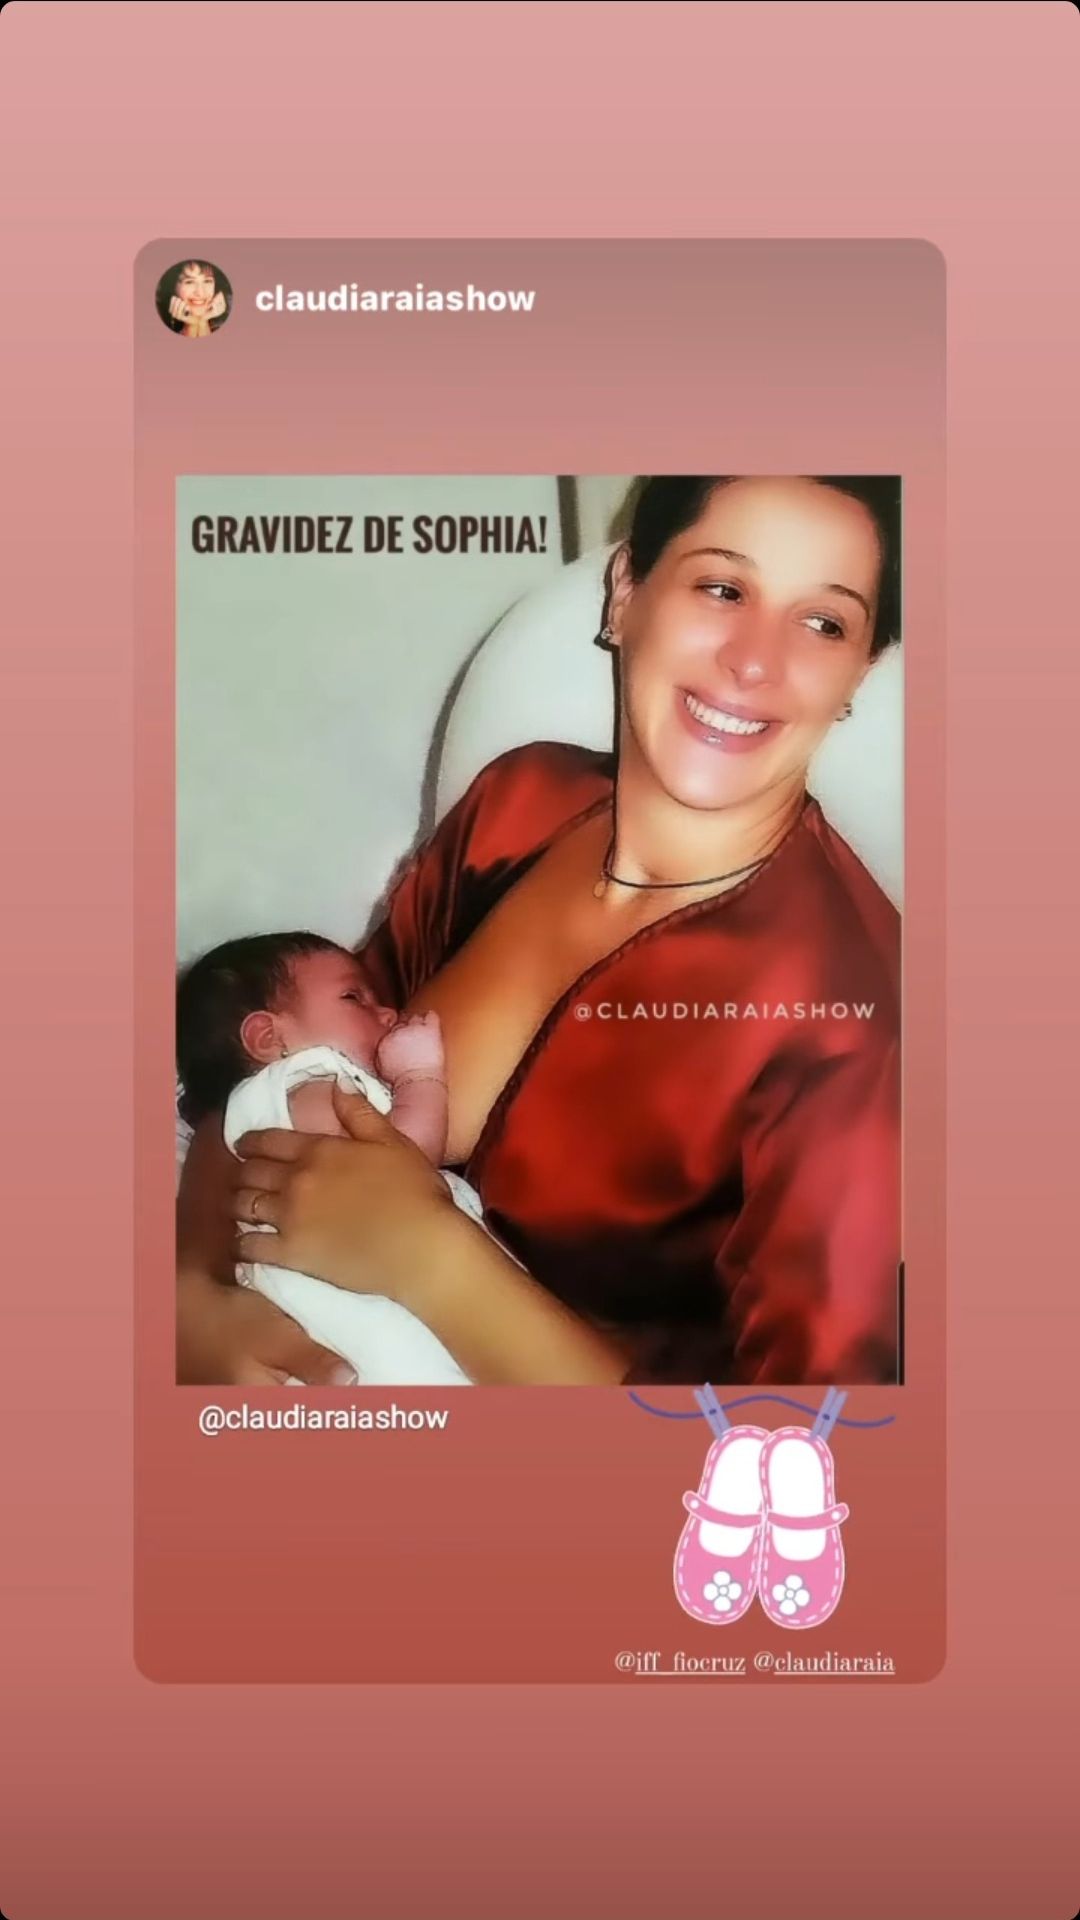 Claudia Raia recorda clique amamentando a filha, Sophia